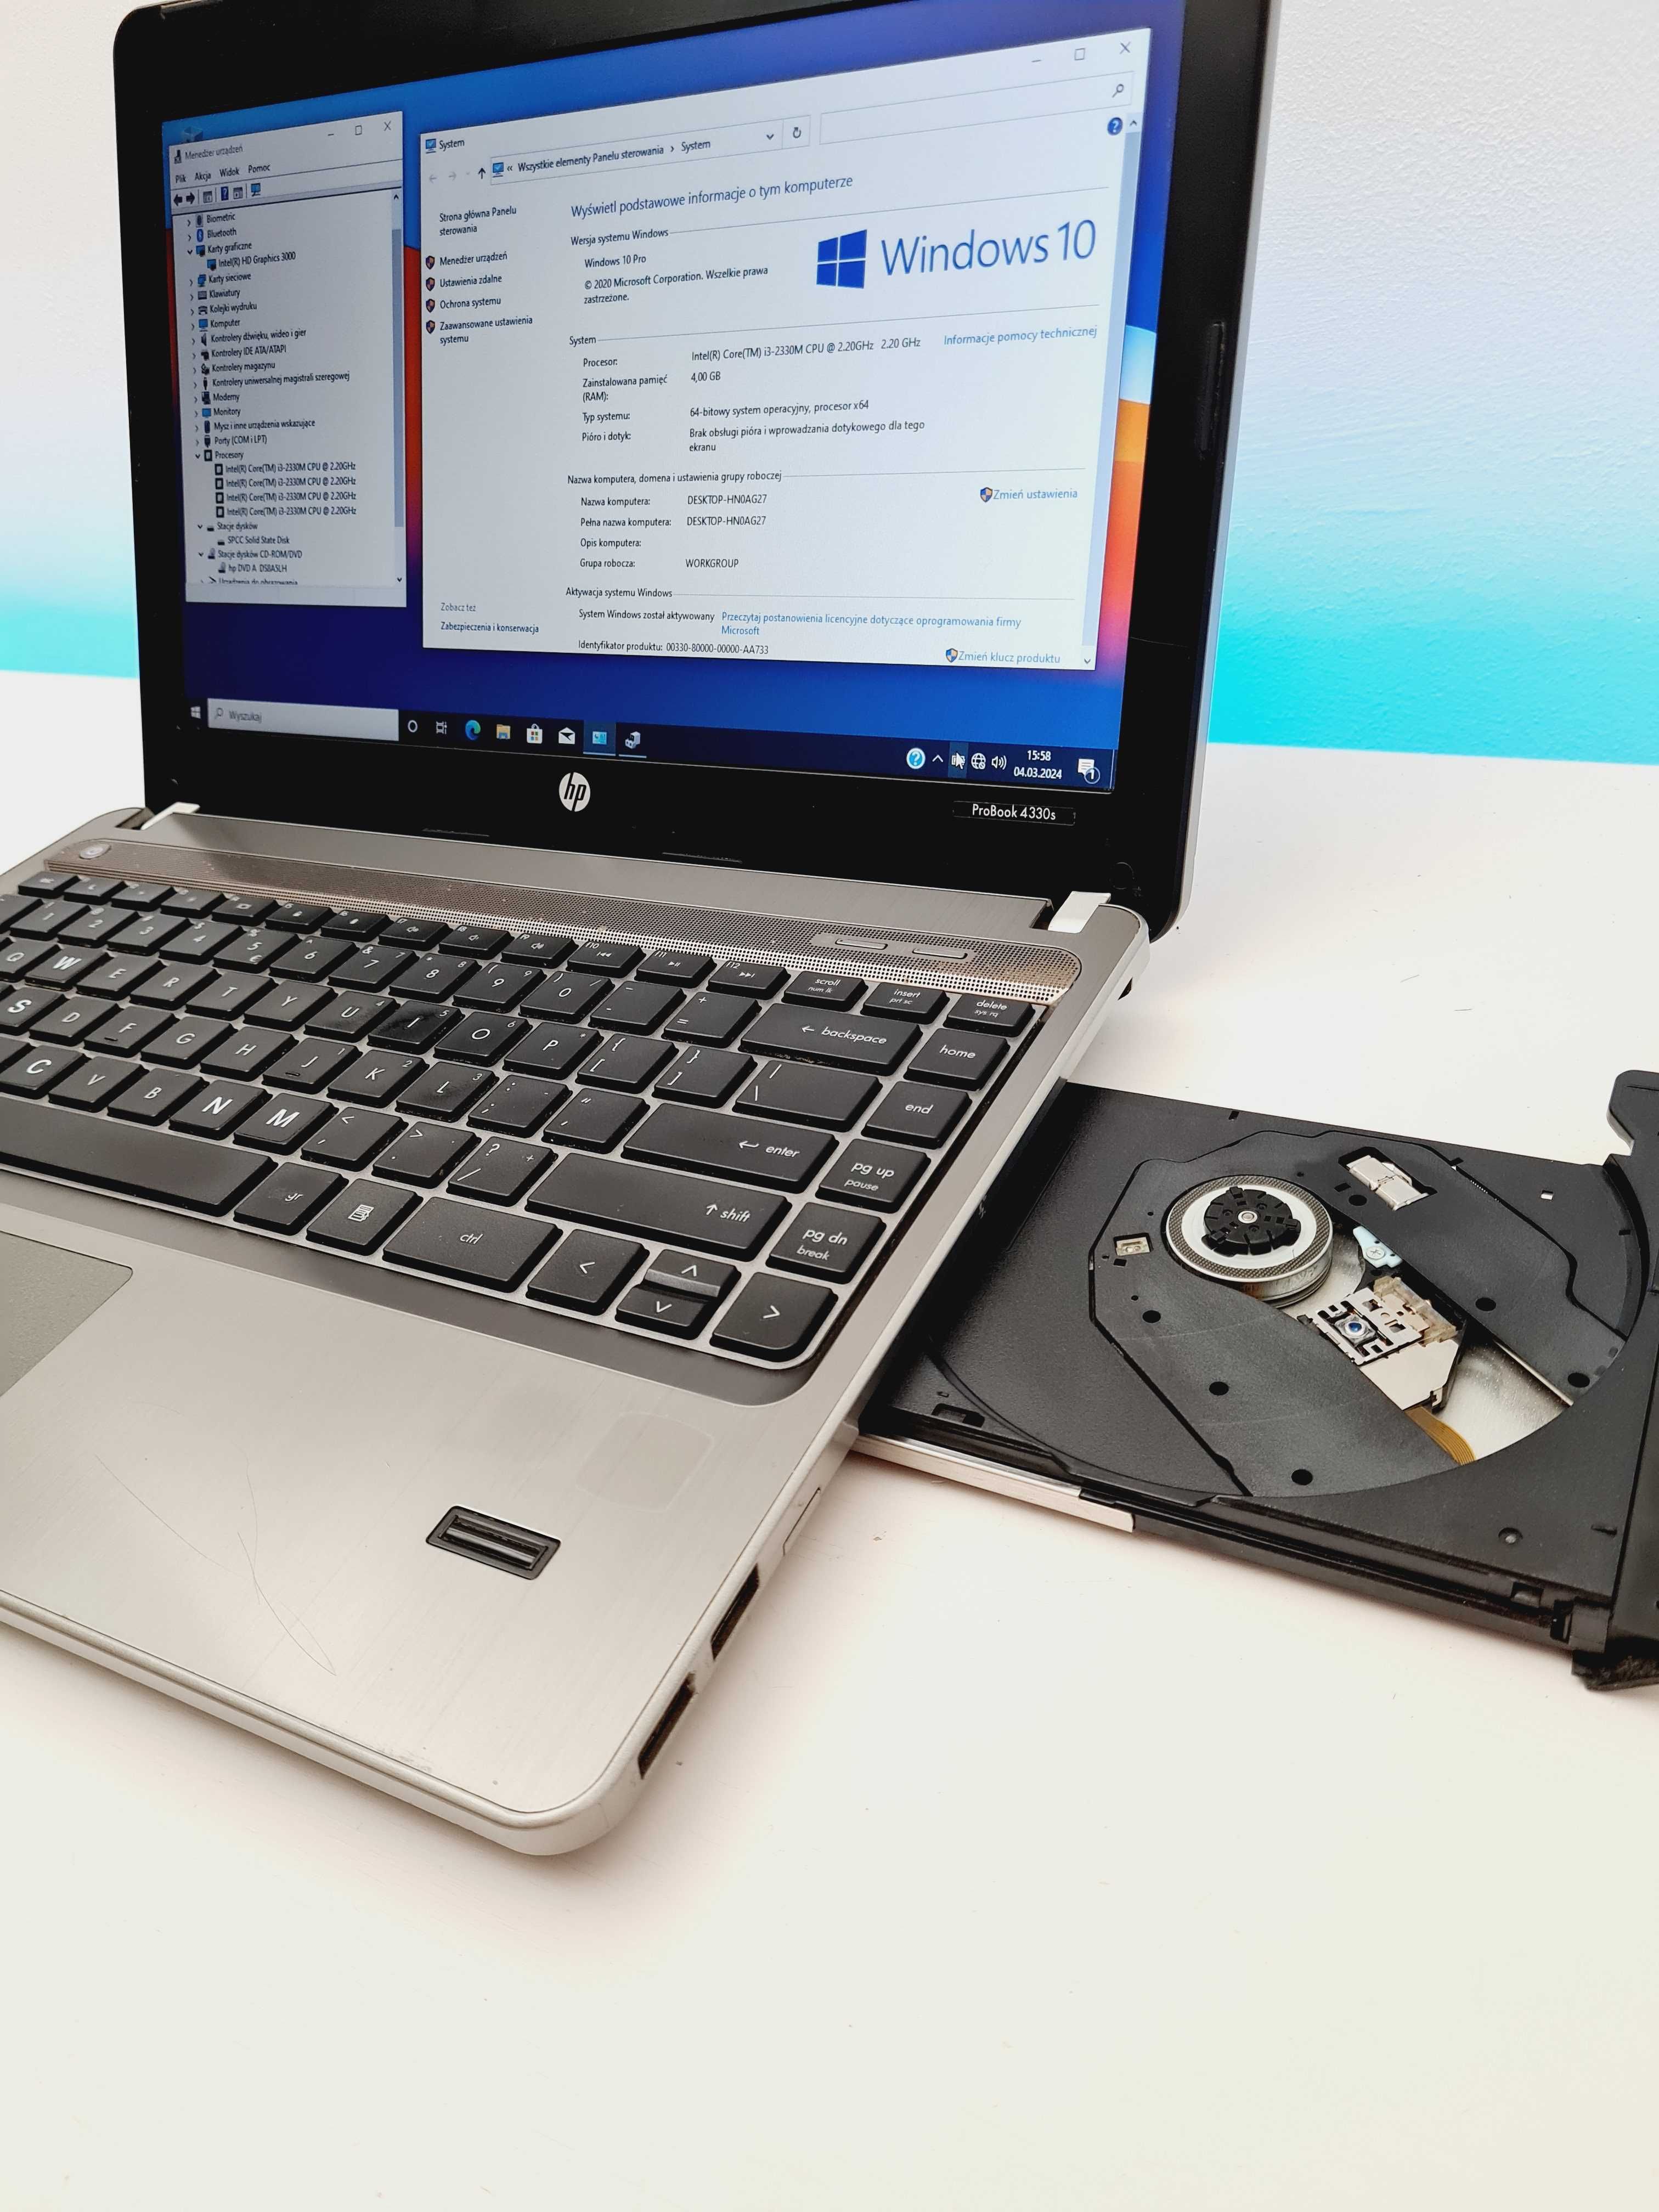 Laptop HP ProBook 4330s, i3, 4gb/128ssd, SRS Premium Audio, multimedia